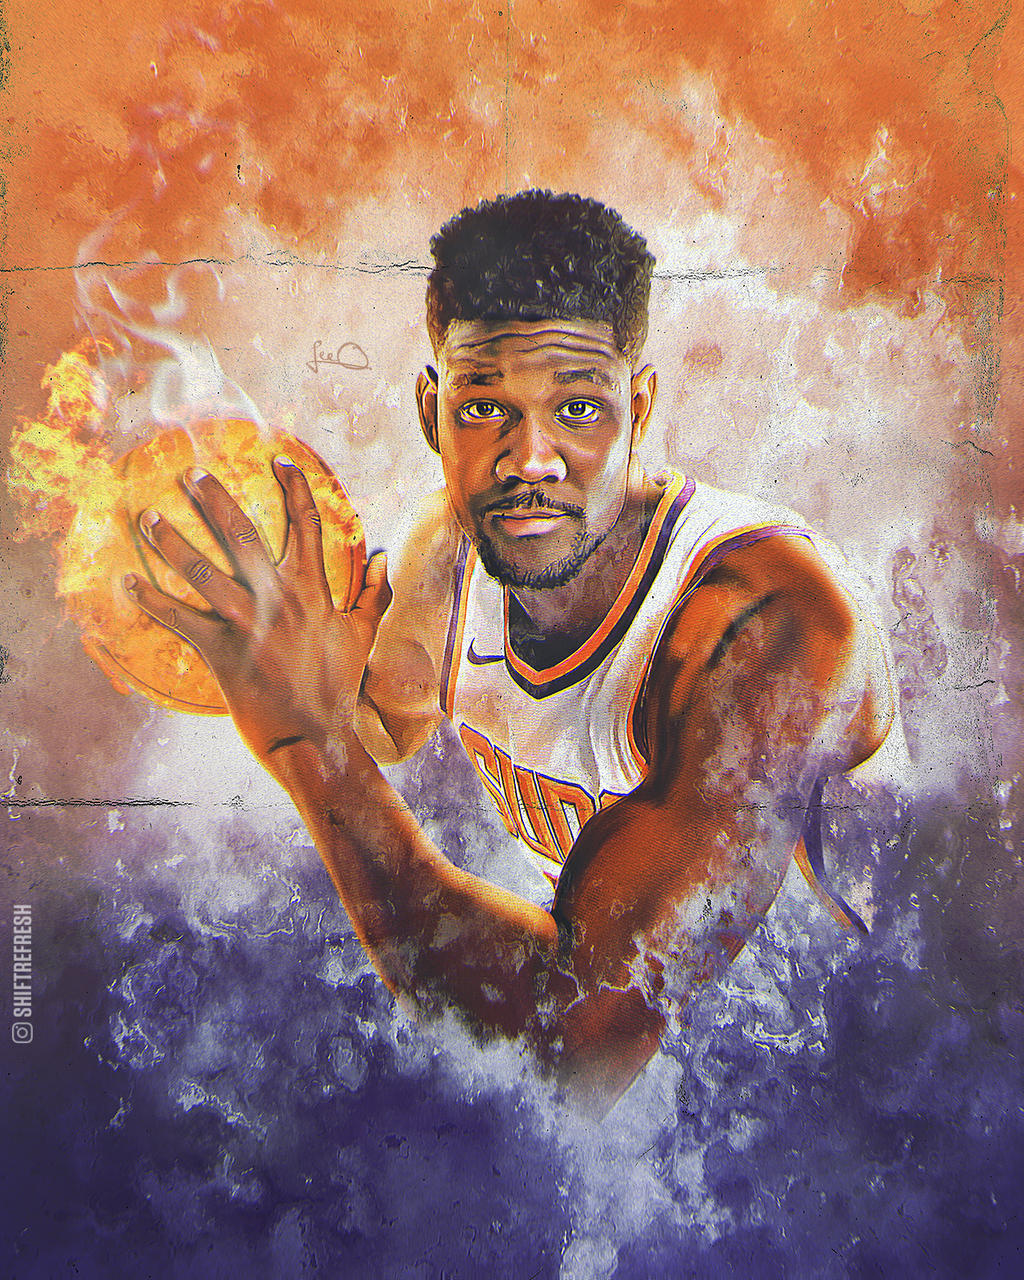 Deandre Ayton Phoenix Suns 2021 Wallpapers